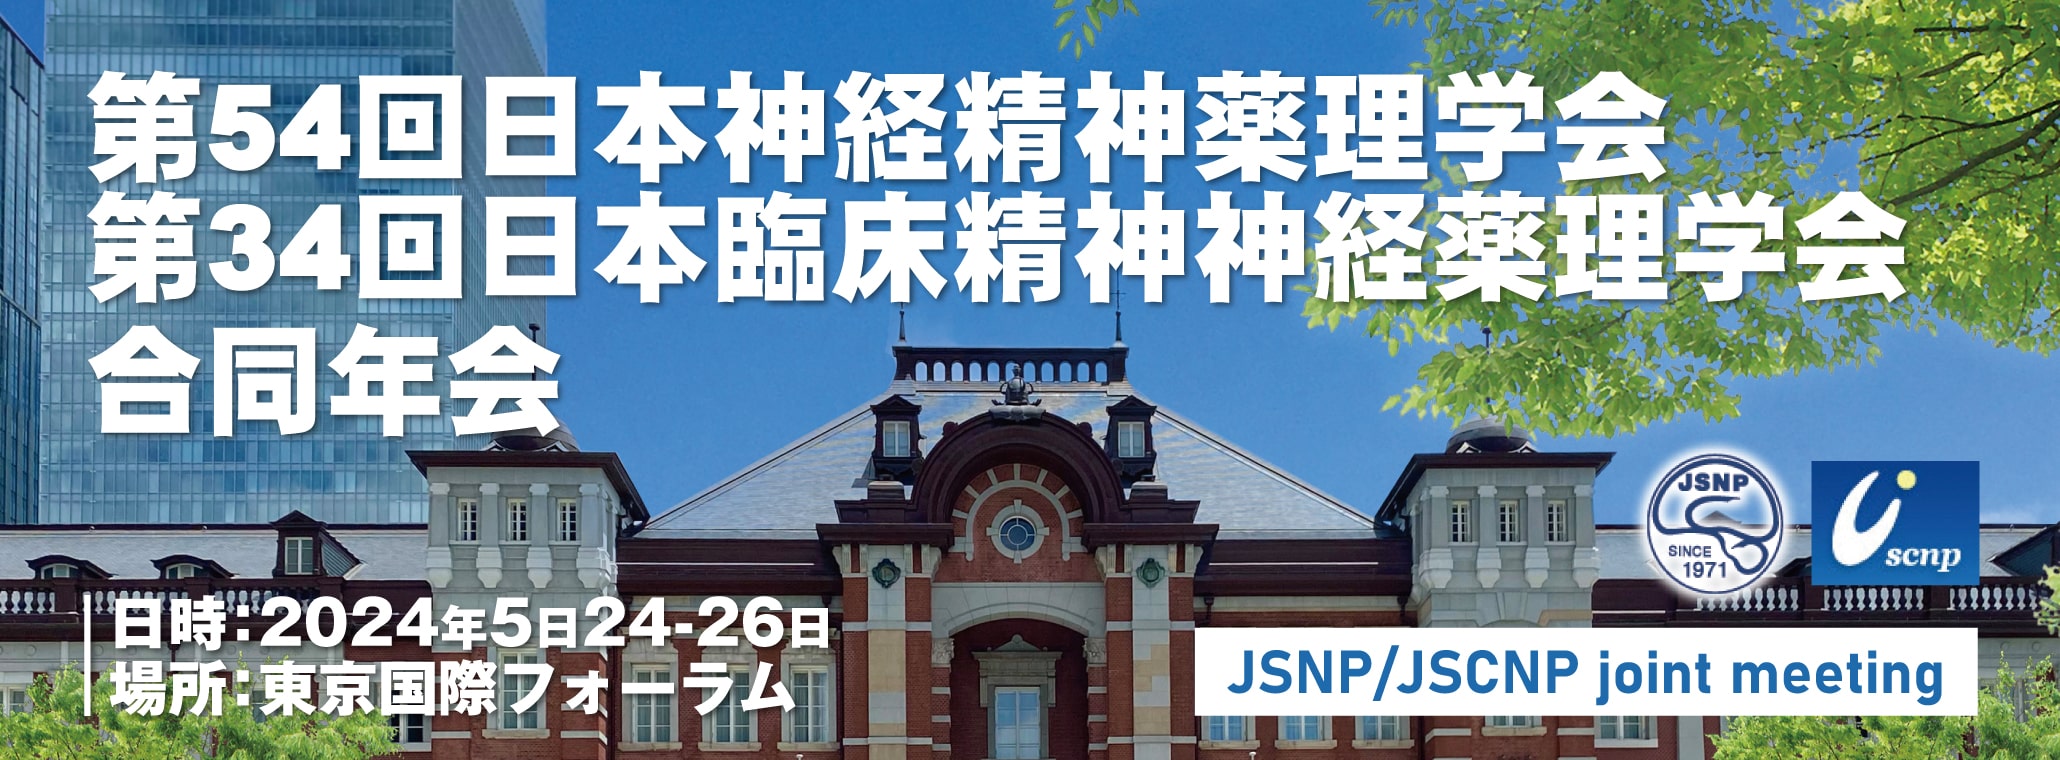 JSNP 日本神経精神薬理学